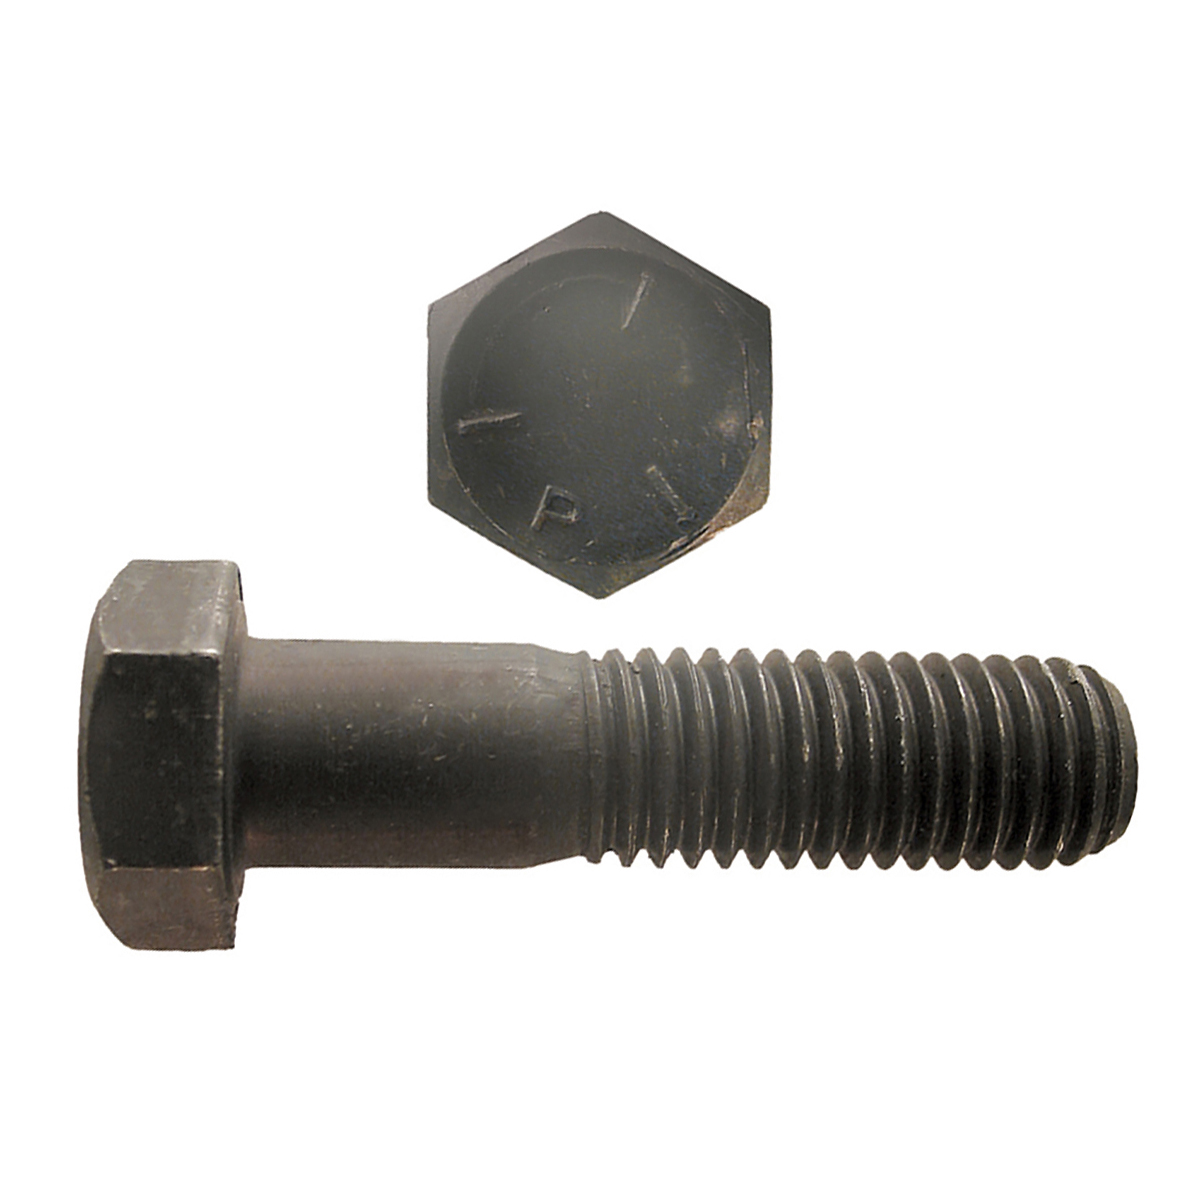 4x Thick M8 x 75mm Metal Dowel Screws WOOD-METAL Steel Fastener Double End Fix 